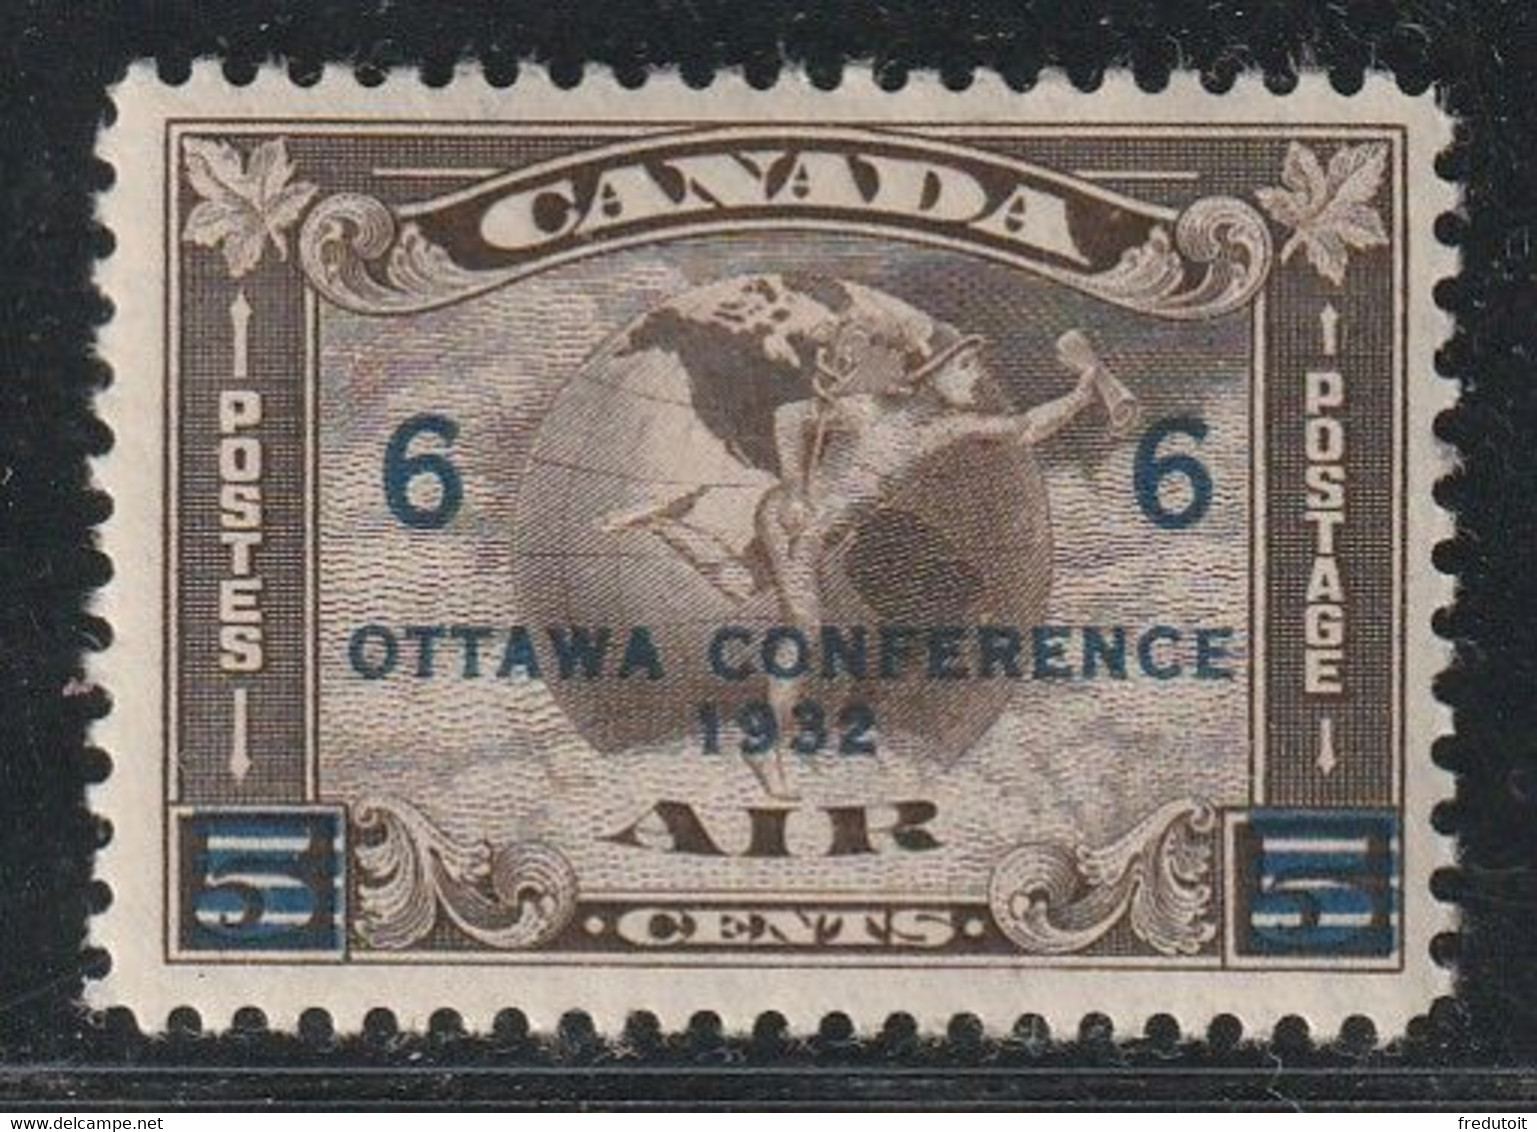 CANADA - Poste Aérienne : N°4 * (1932) "Ottawa Conférence 1932" - Poste Aérienne